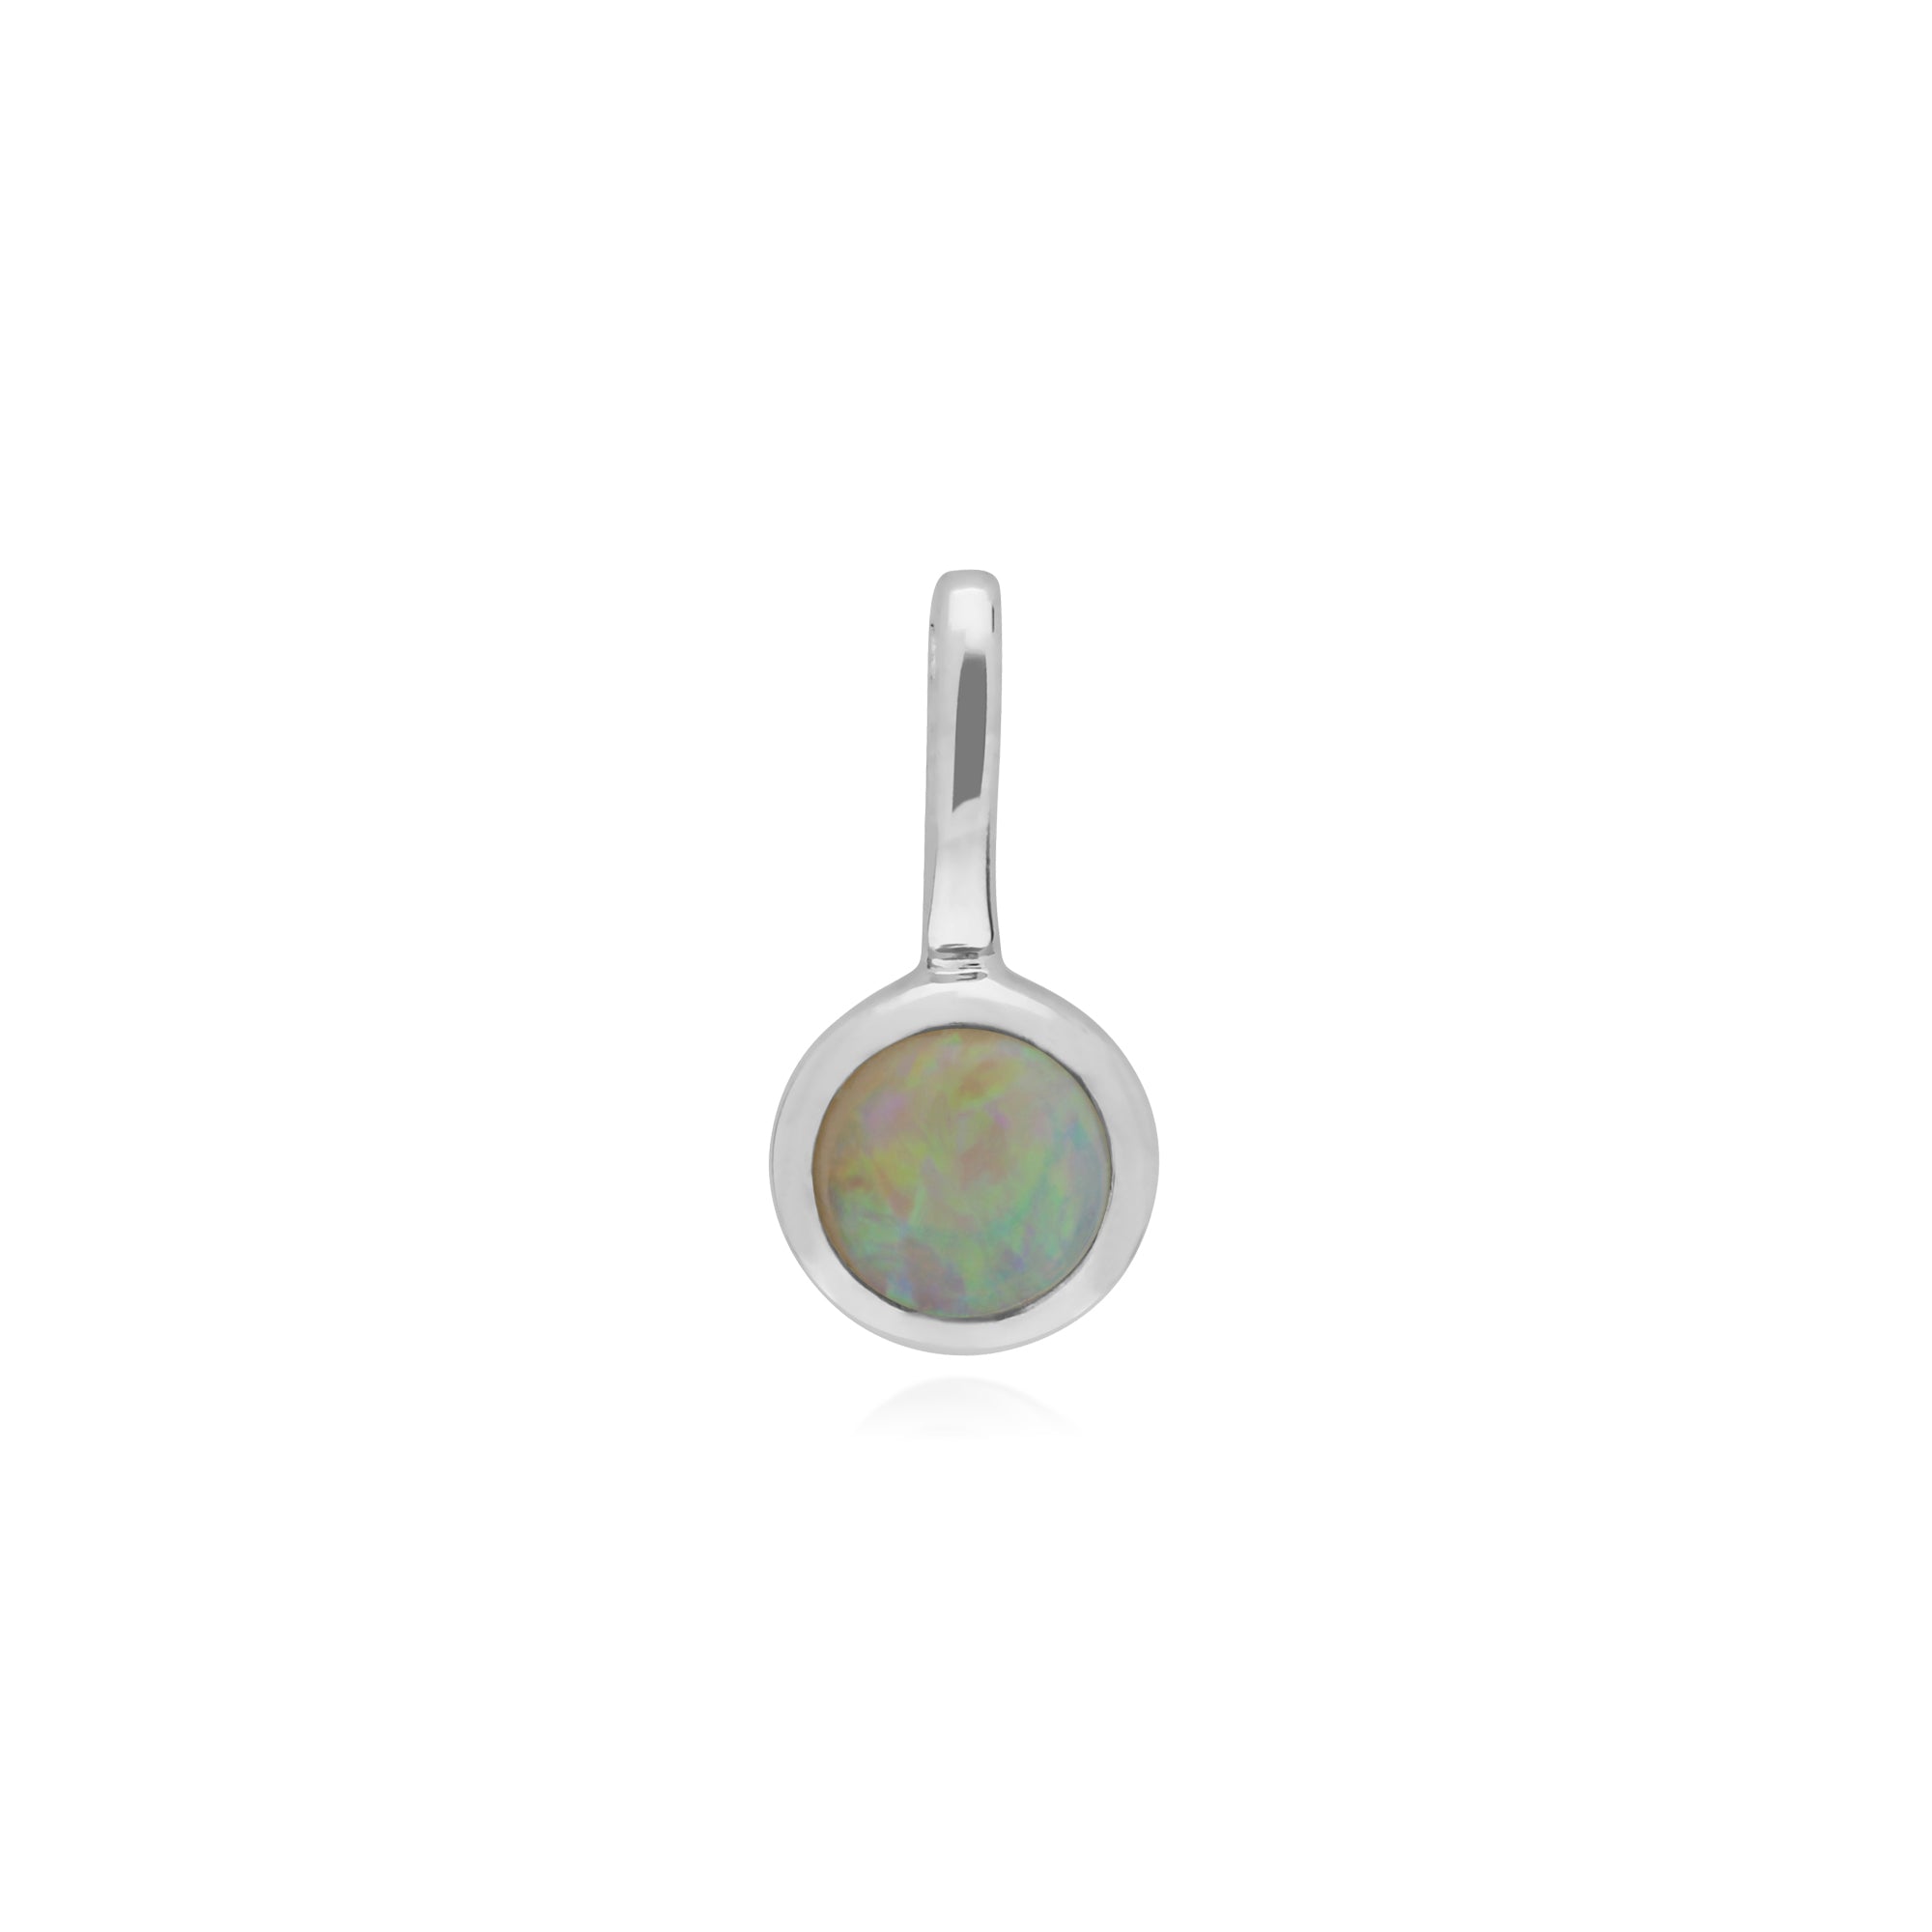 270P028402925-270P026601925 Classic Swirl Heart Lock Pendant & Opal Charm in 925 Sterling Silver 2